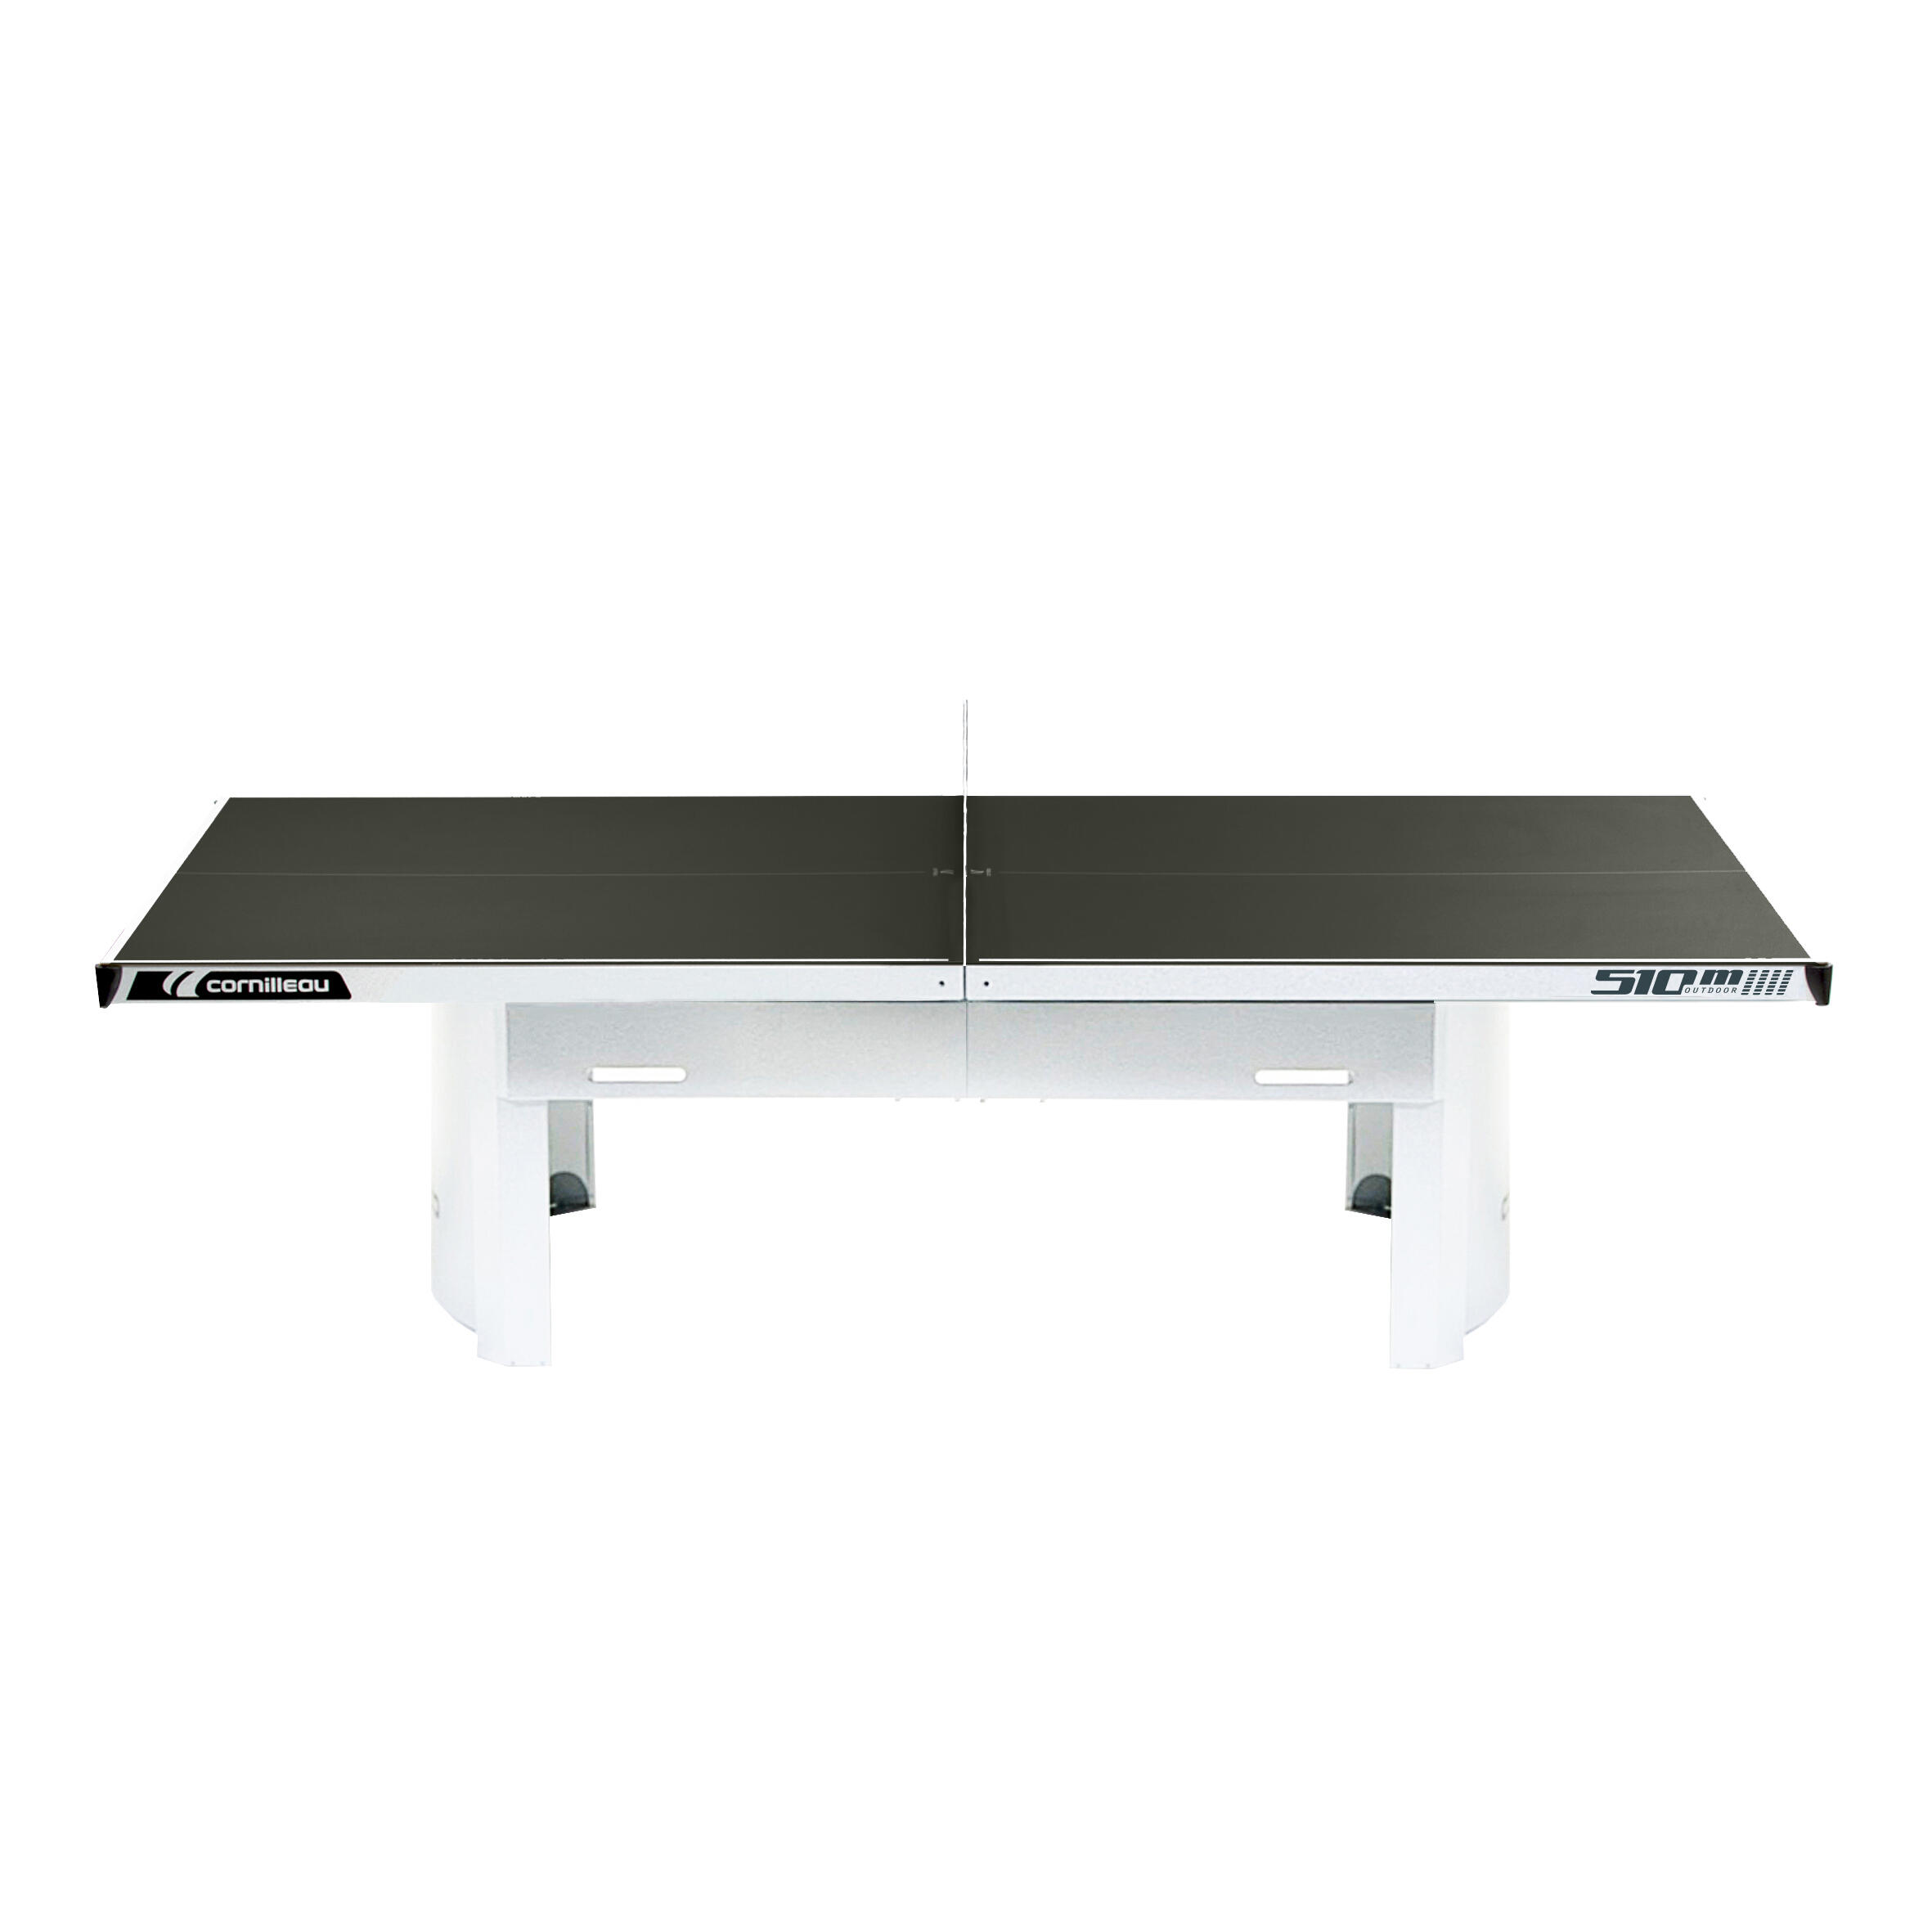 510 Pro Outdoor Table Tennis Table - Grey 2/9